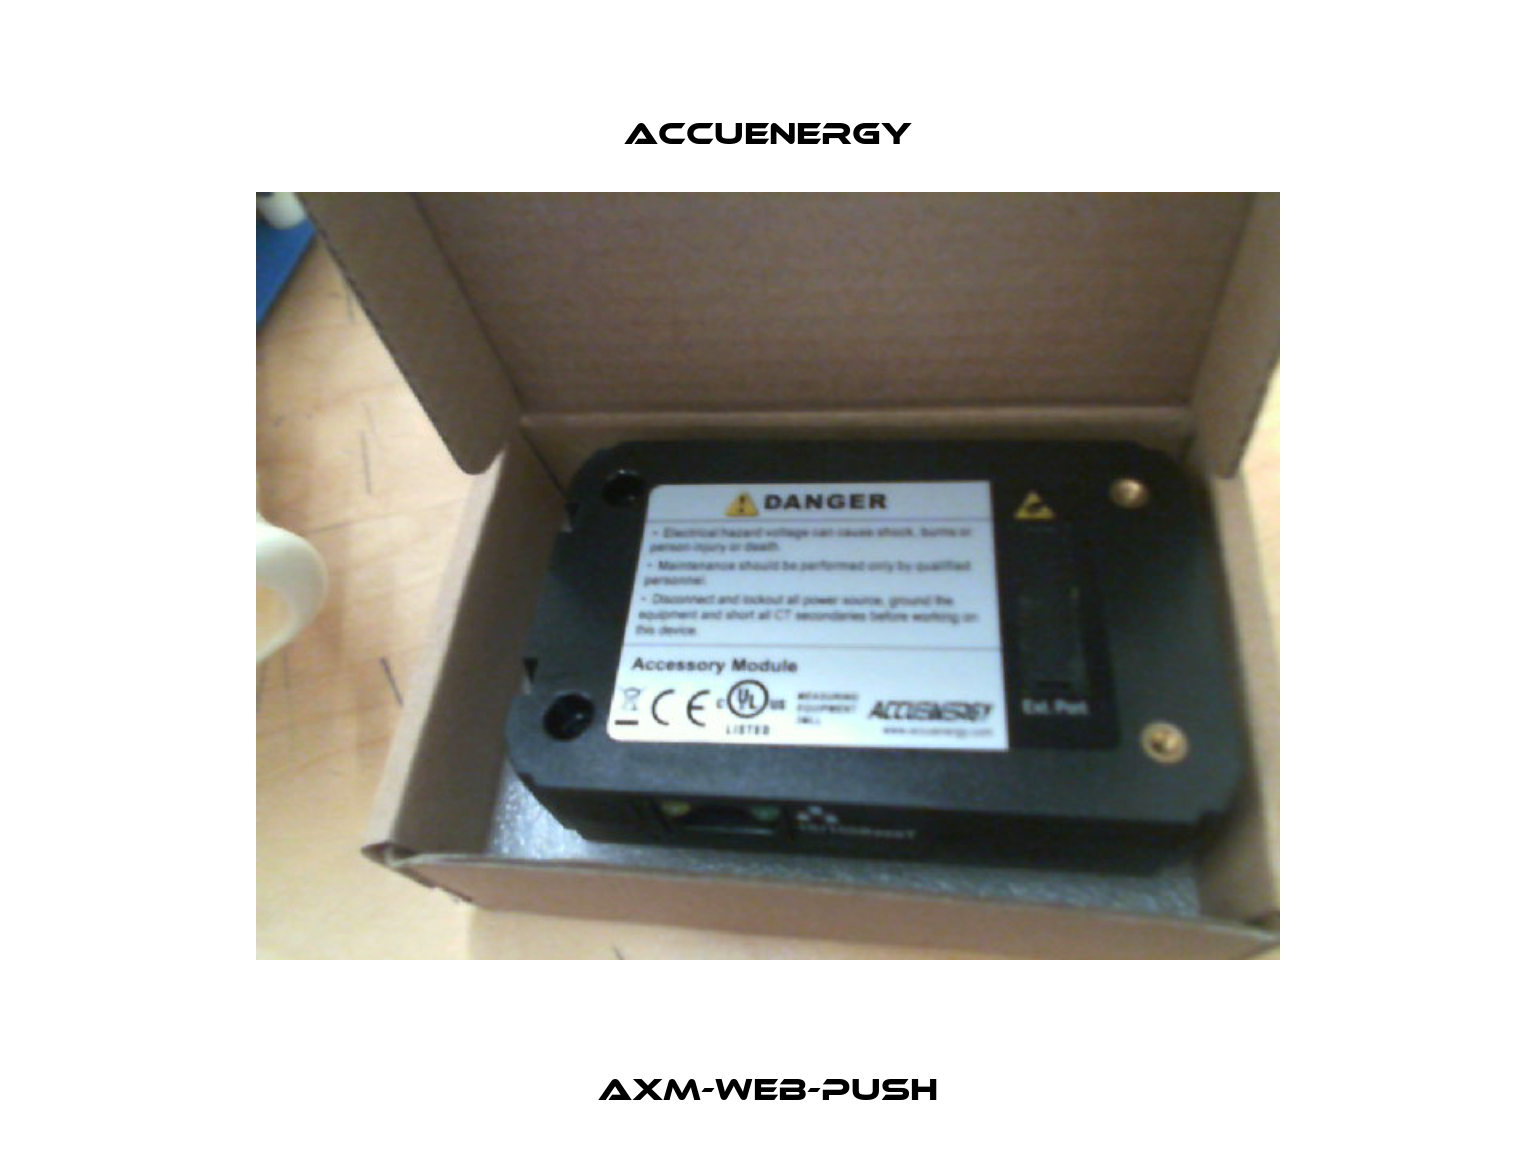 AXM-WEB-PUSH Accuenergy